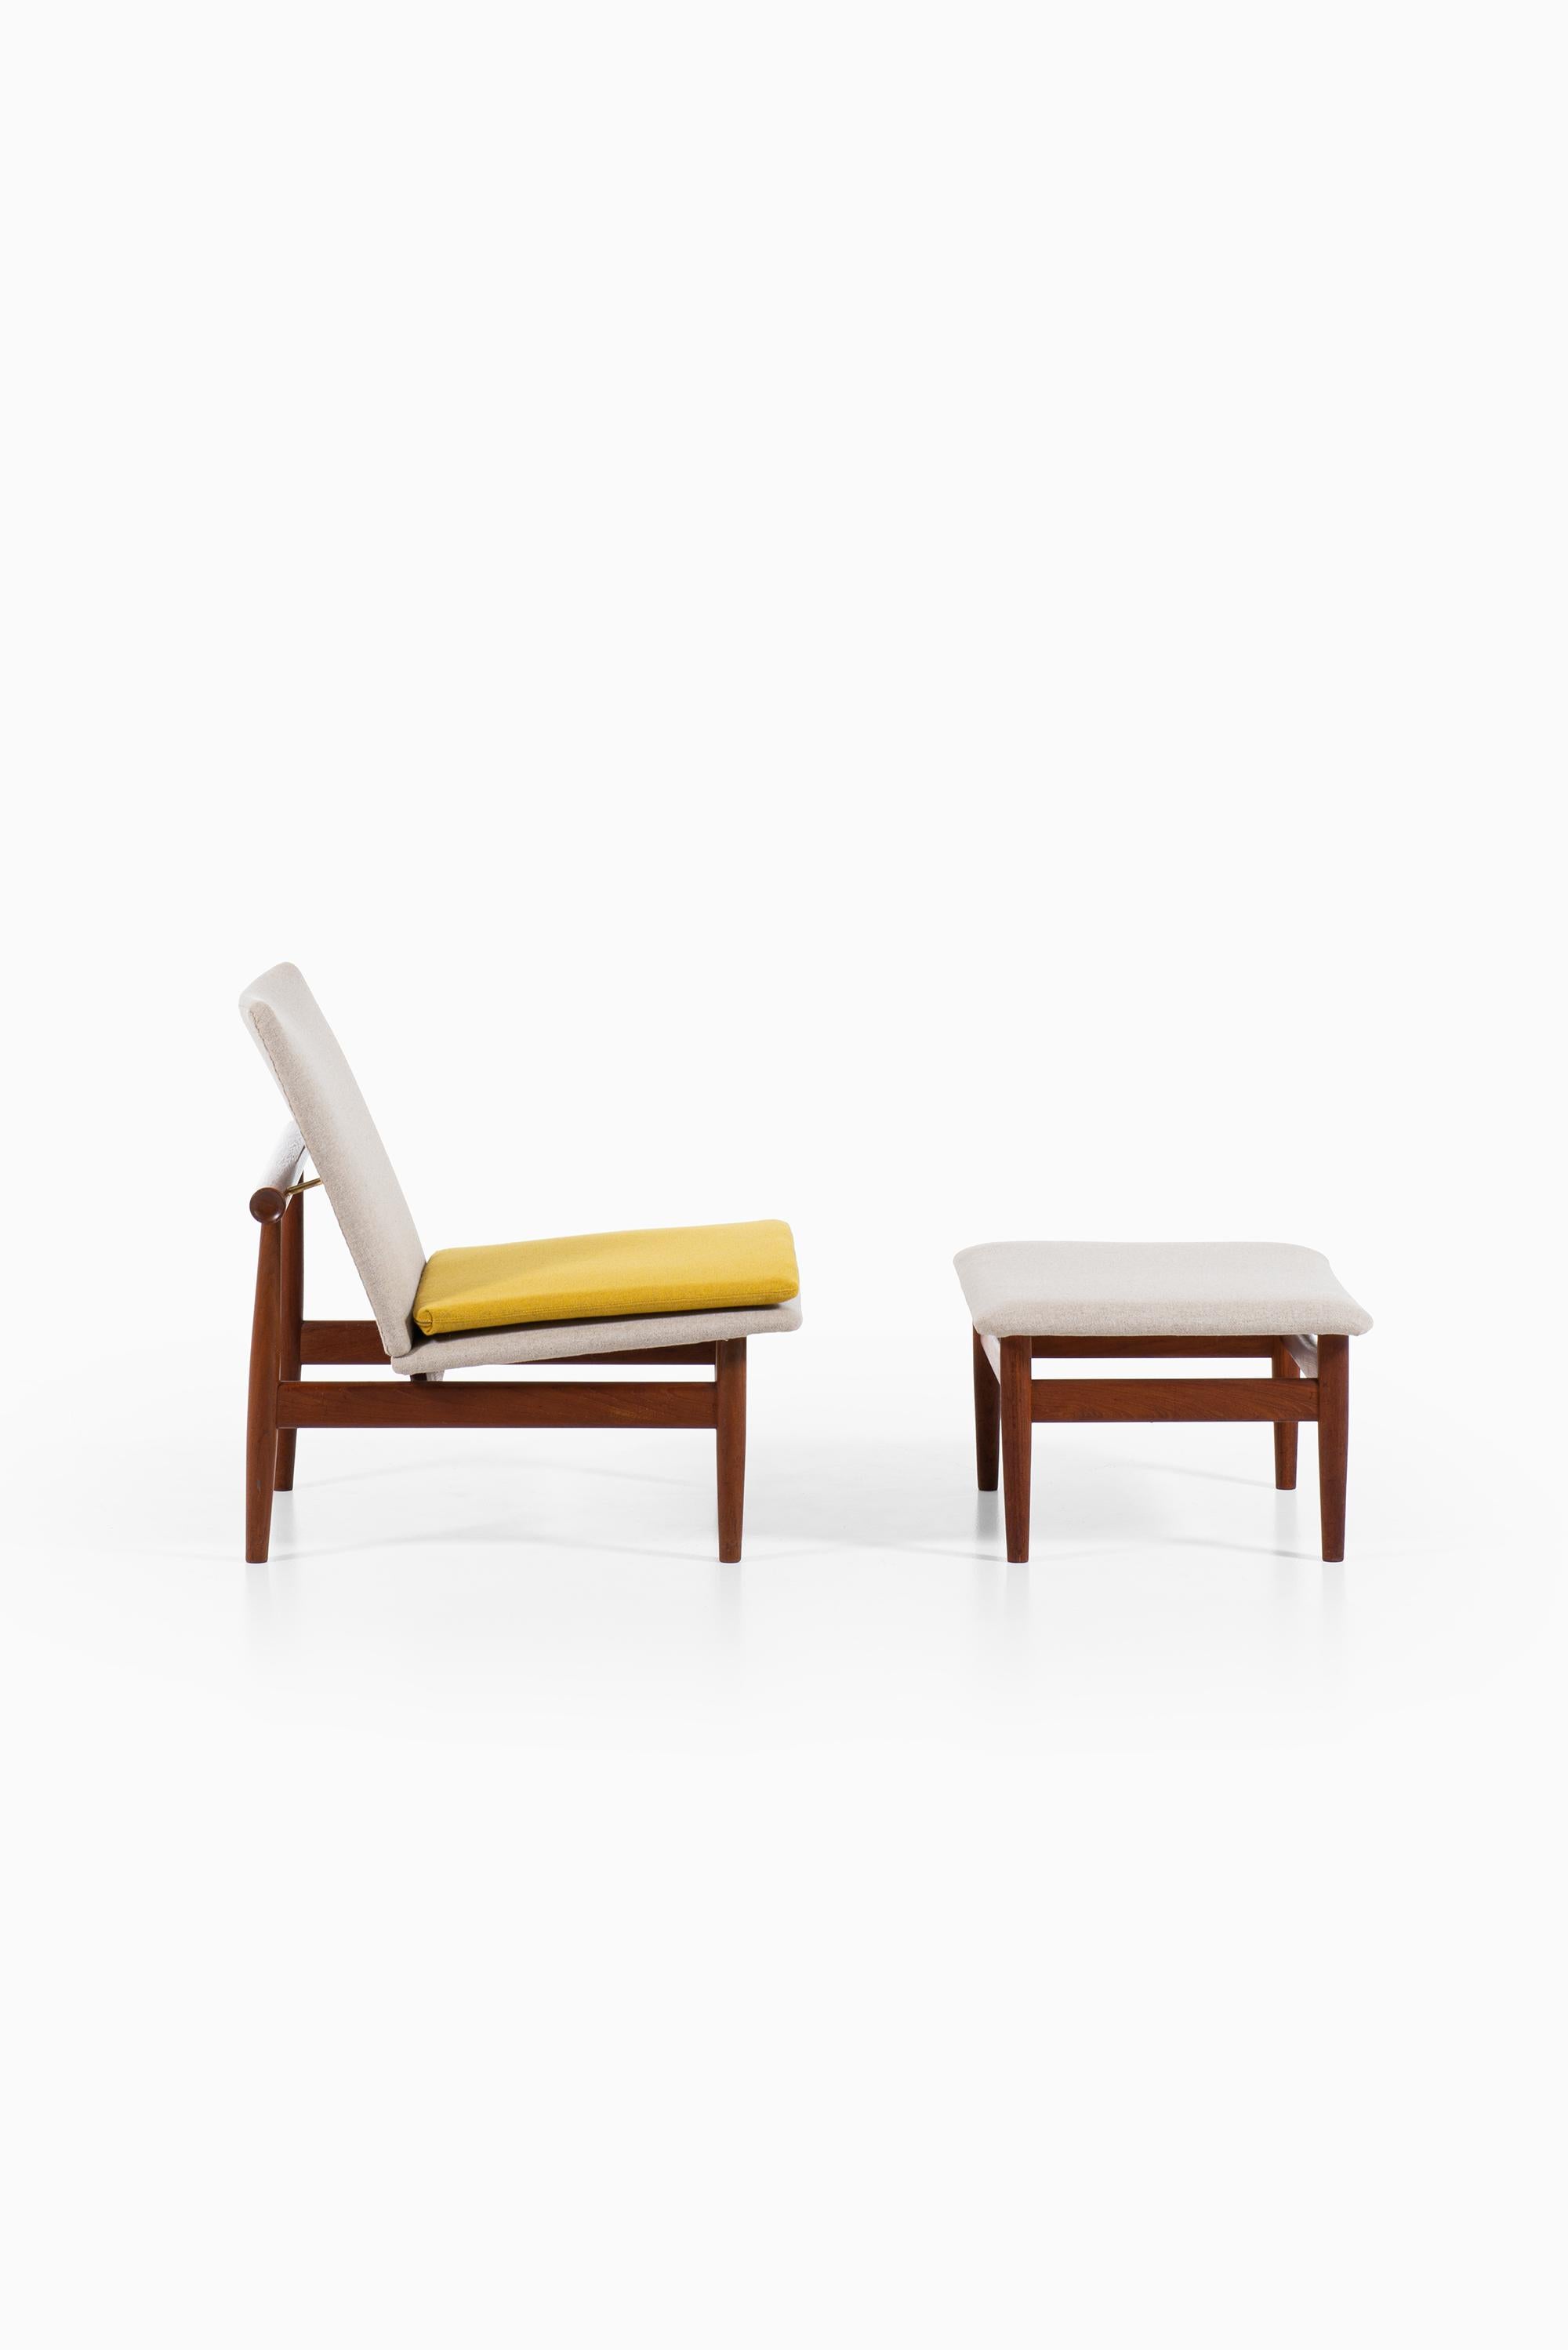 Mid-20th Century Finn Juhl Easy Chairs Model Japan Produced by France & Son in Denmark